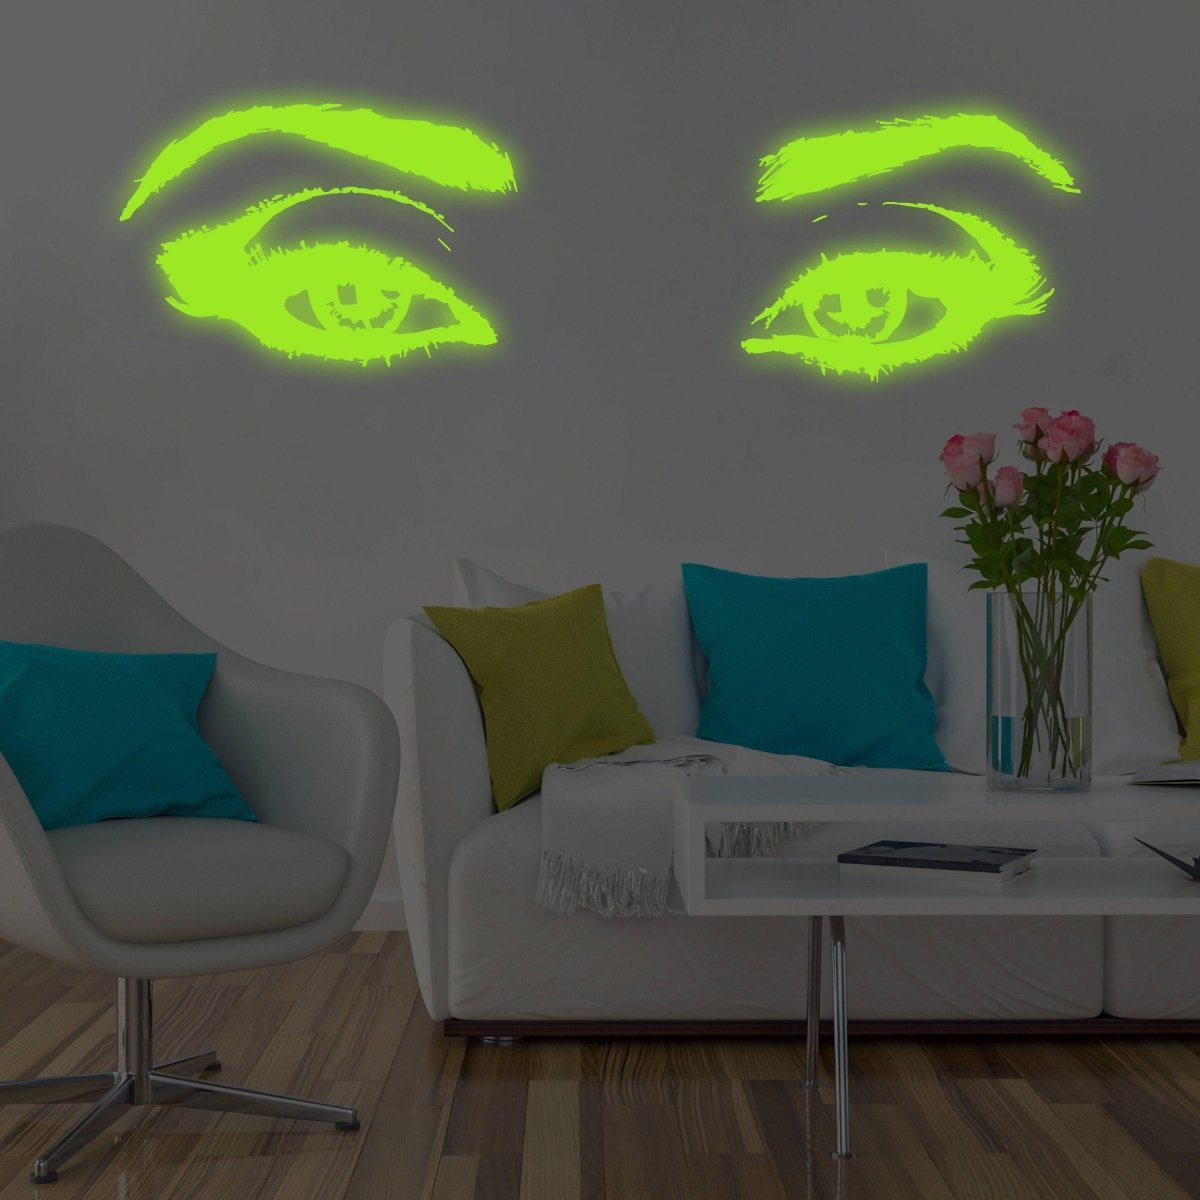 Glowing Luminescent Eye Vinyl Wall Decal: Enchanting Wall Sticker Art